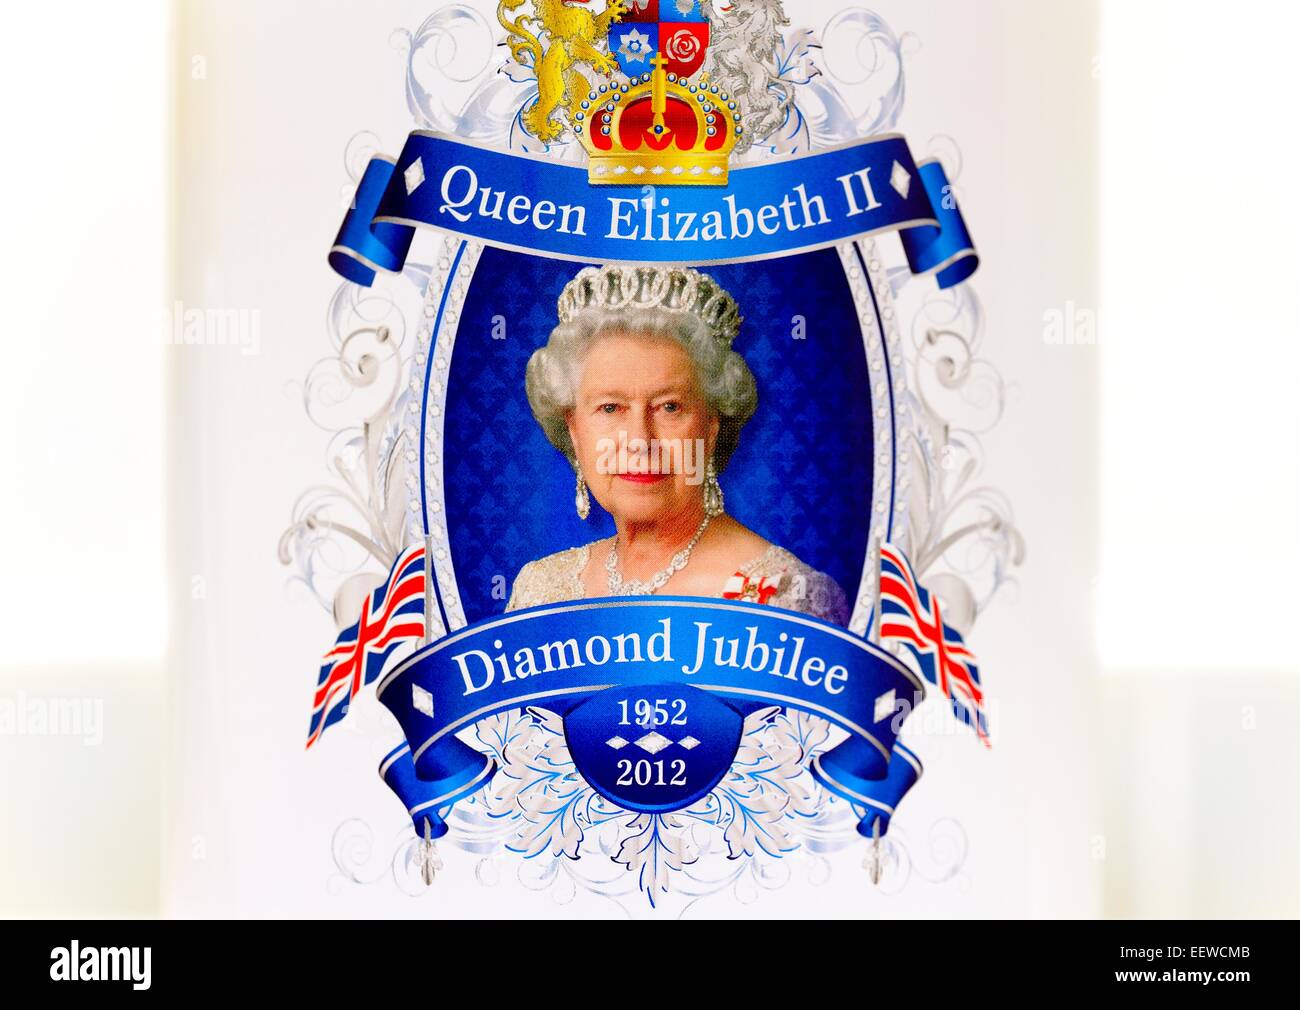 SPOON S/PLATED QUEEN ELIZABETH DIAMOND JUBILEE 1952-2012 WITH FREE UK POSTAGE 